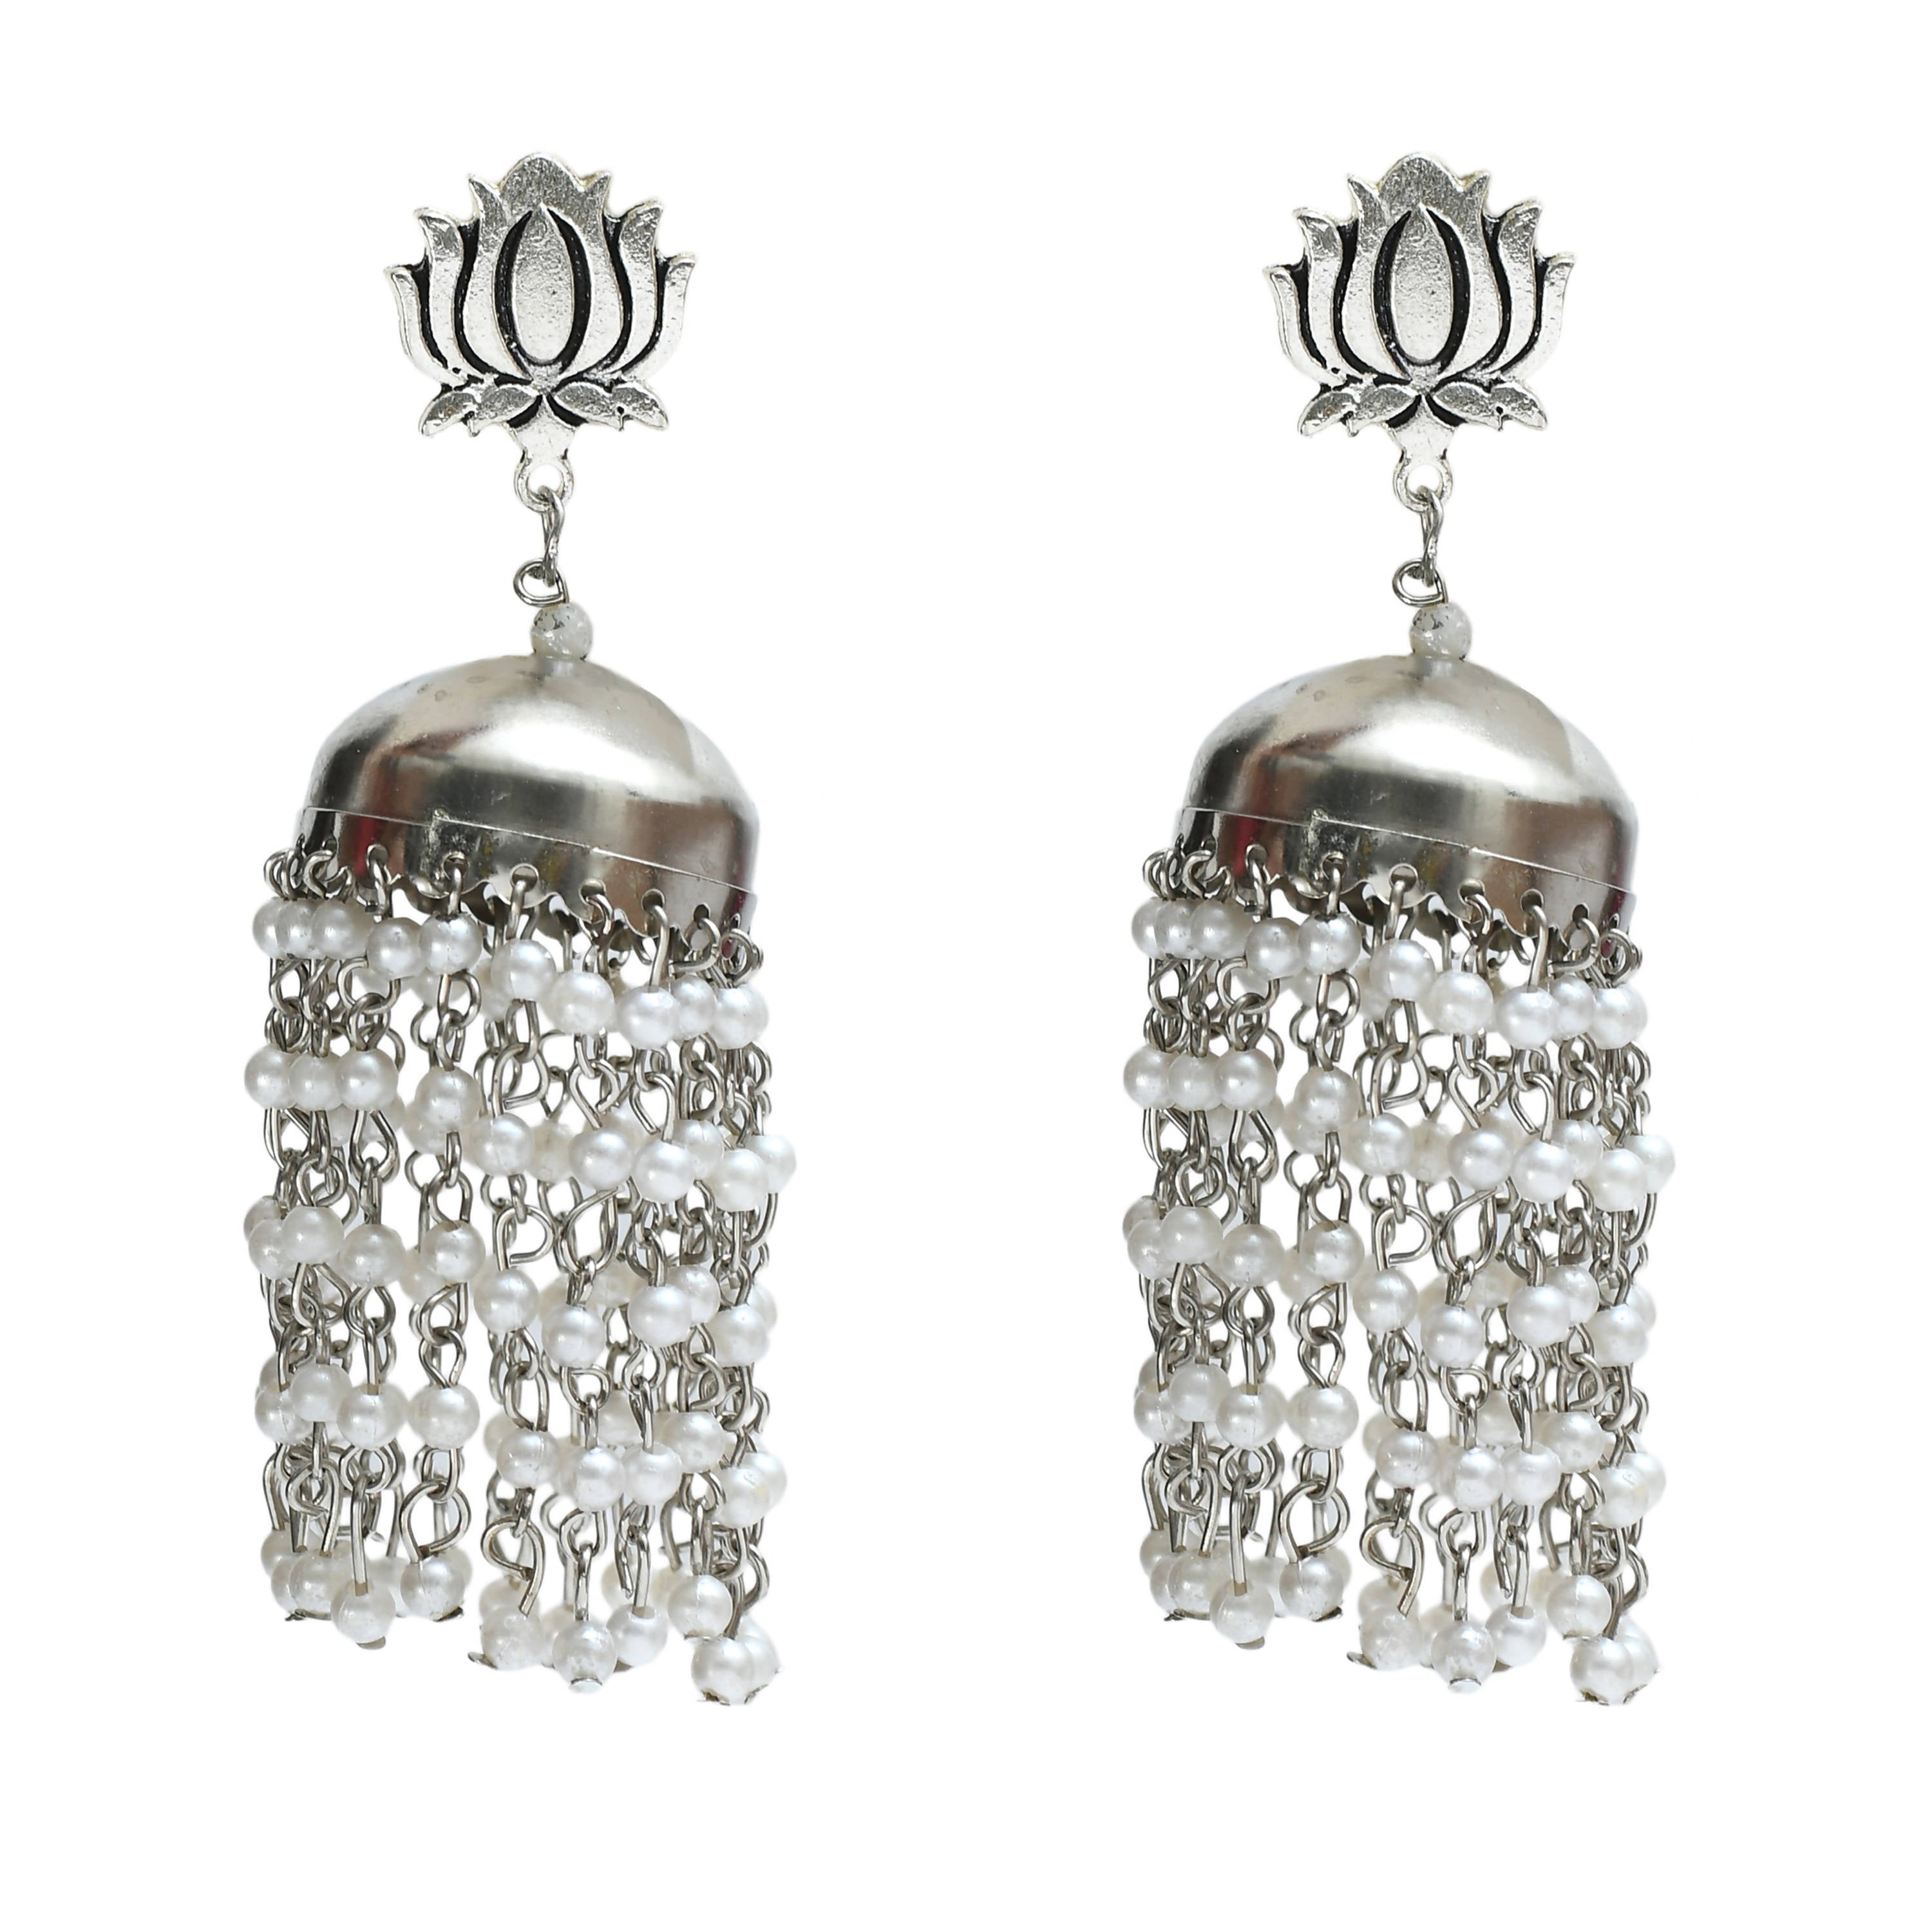 Johar Kamal Silver-Plated Lotus design Earrings with Pearls Jhumkas Jker_077